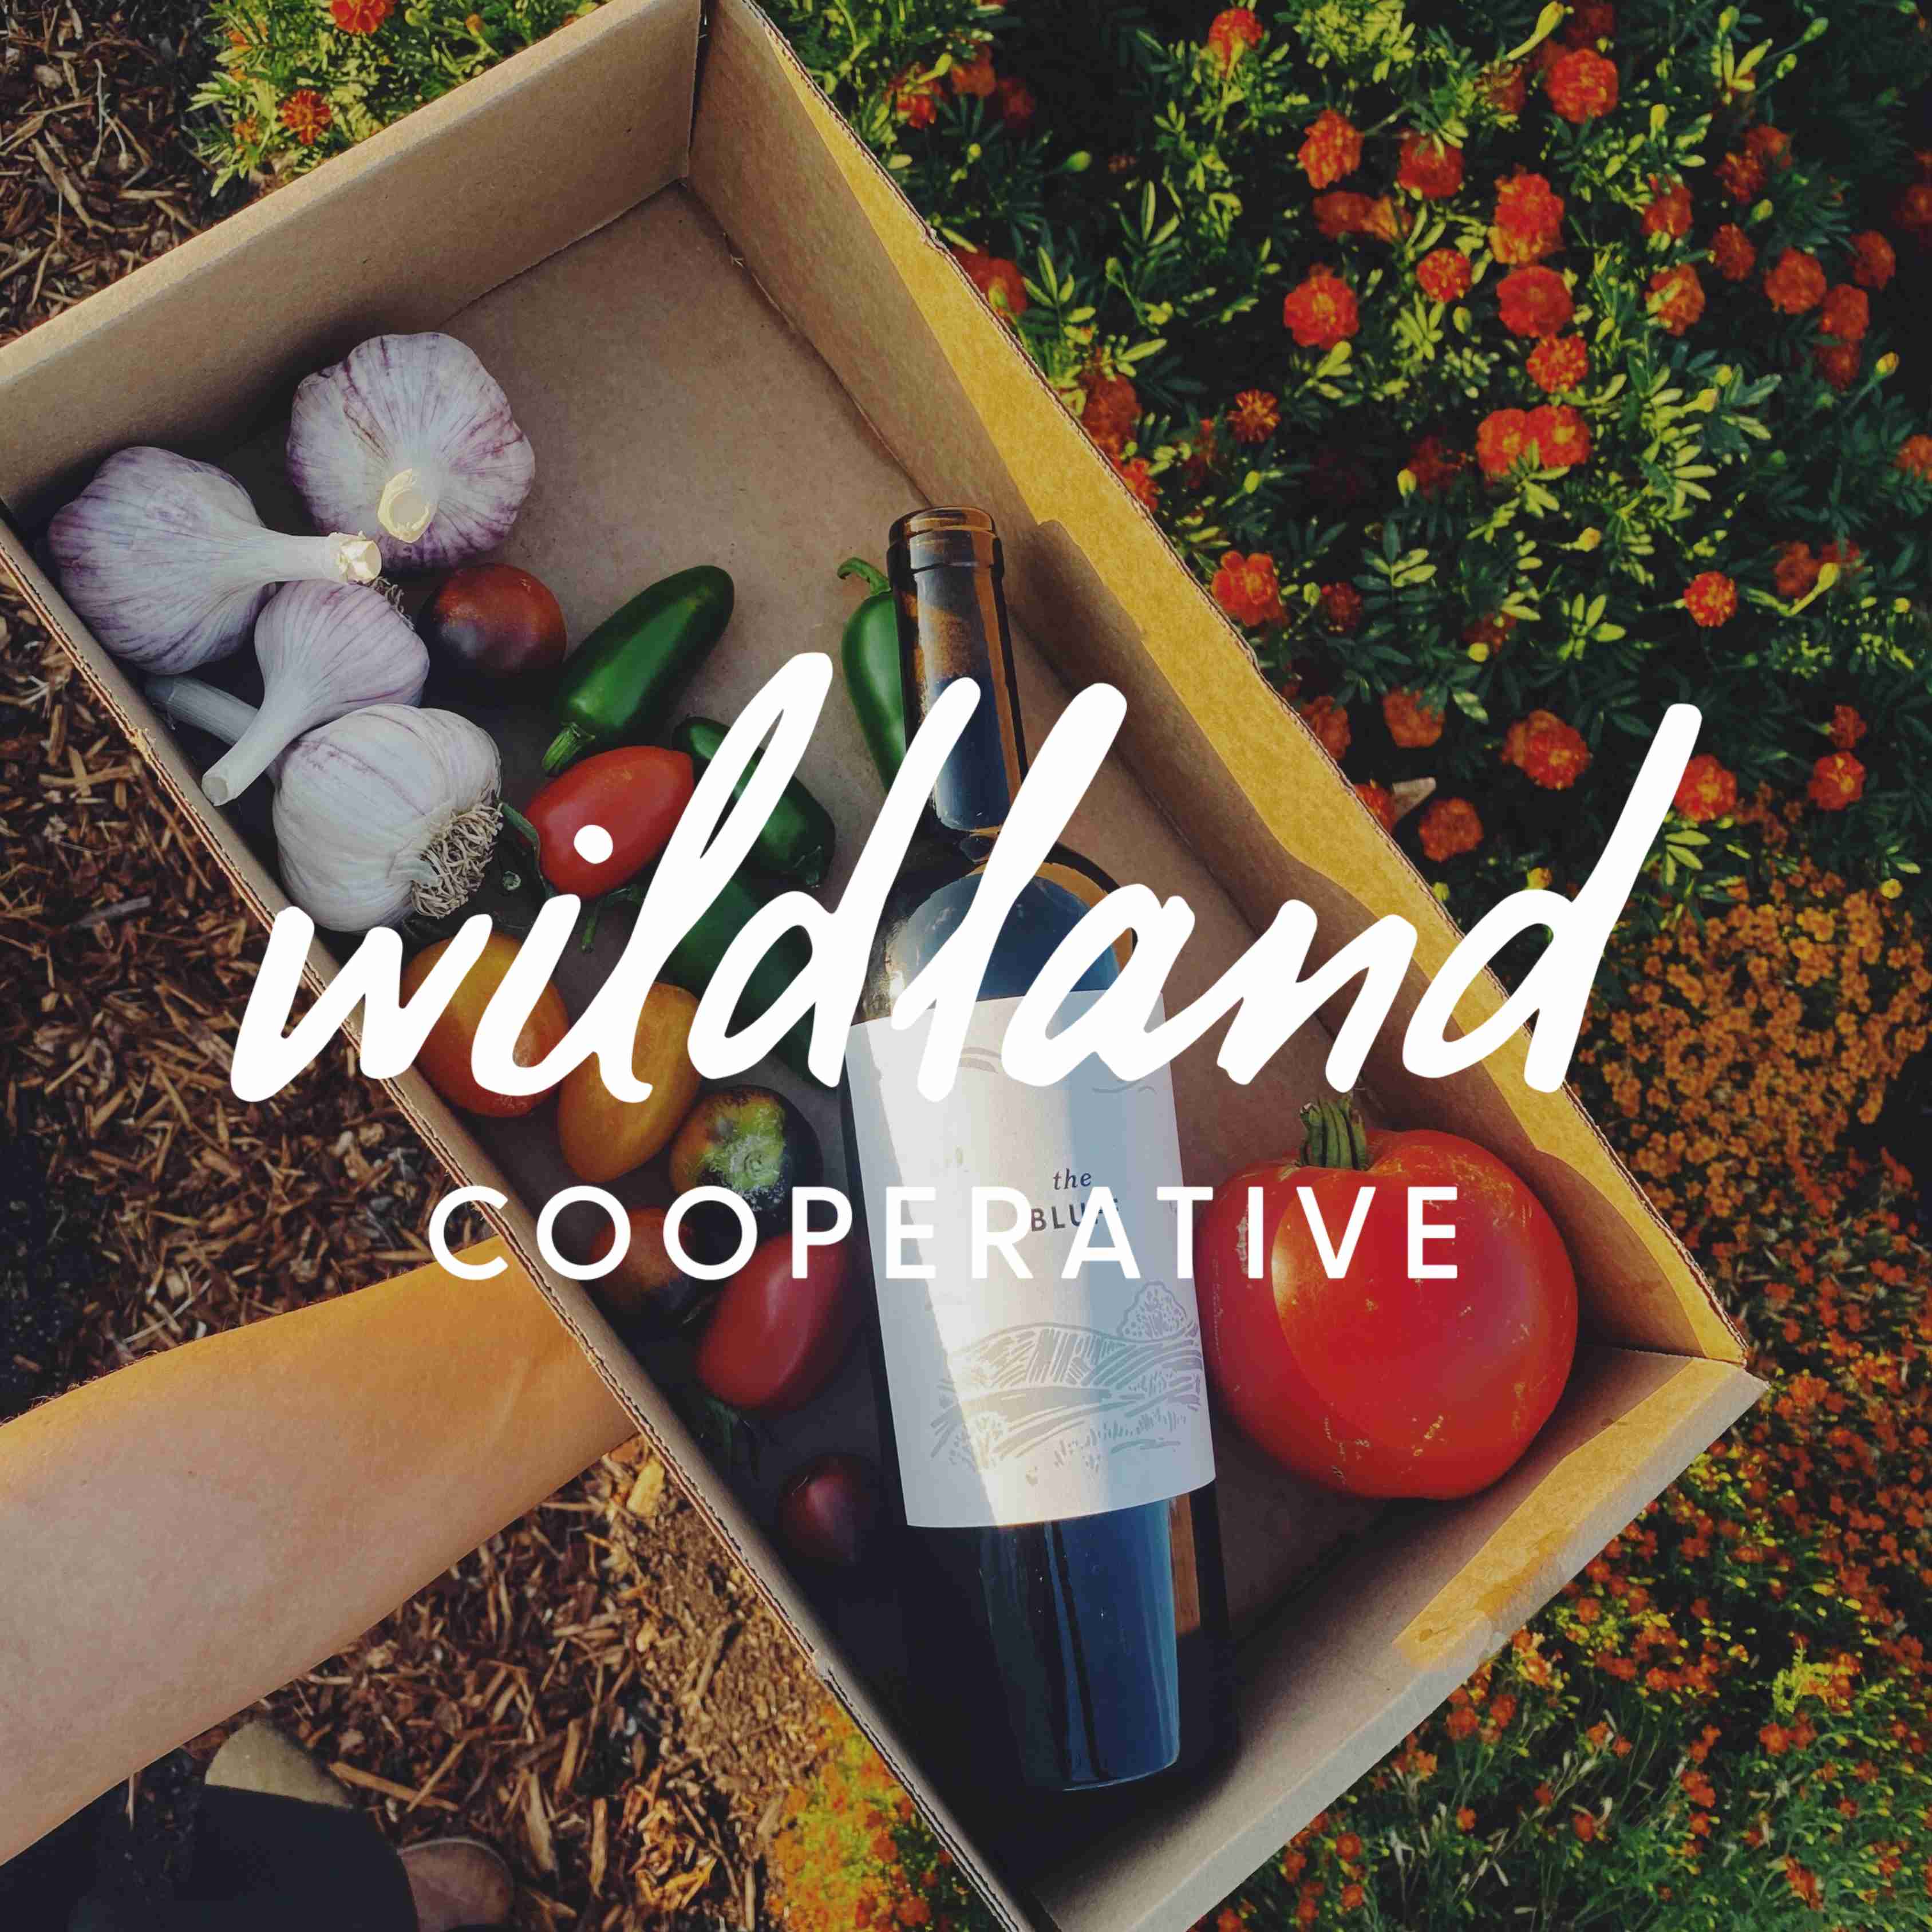 Wildland Cooperative